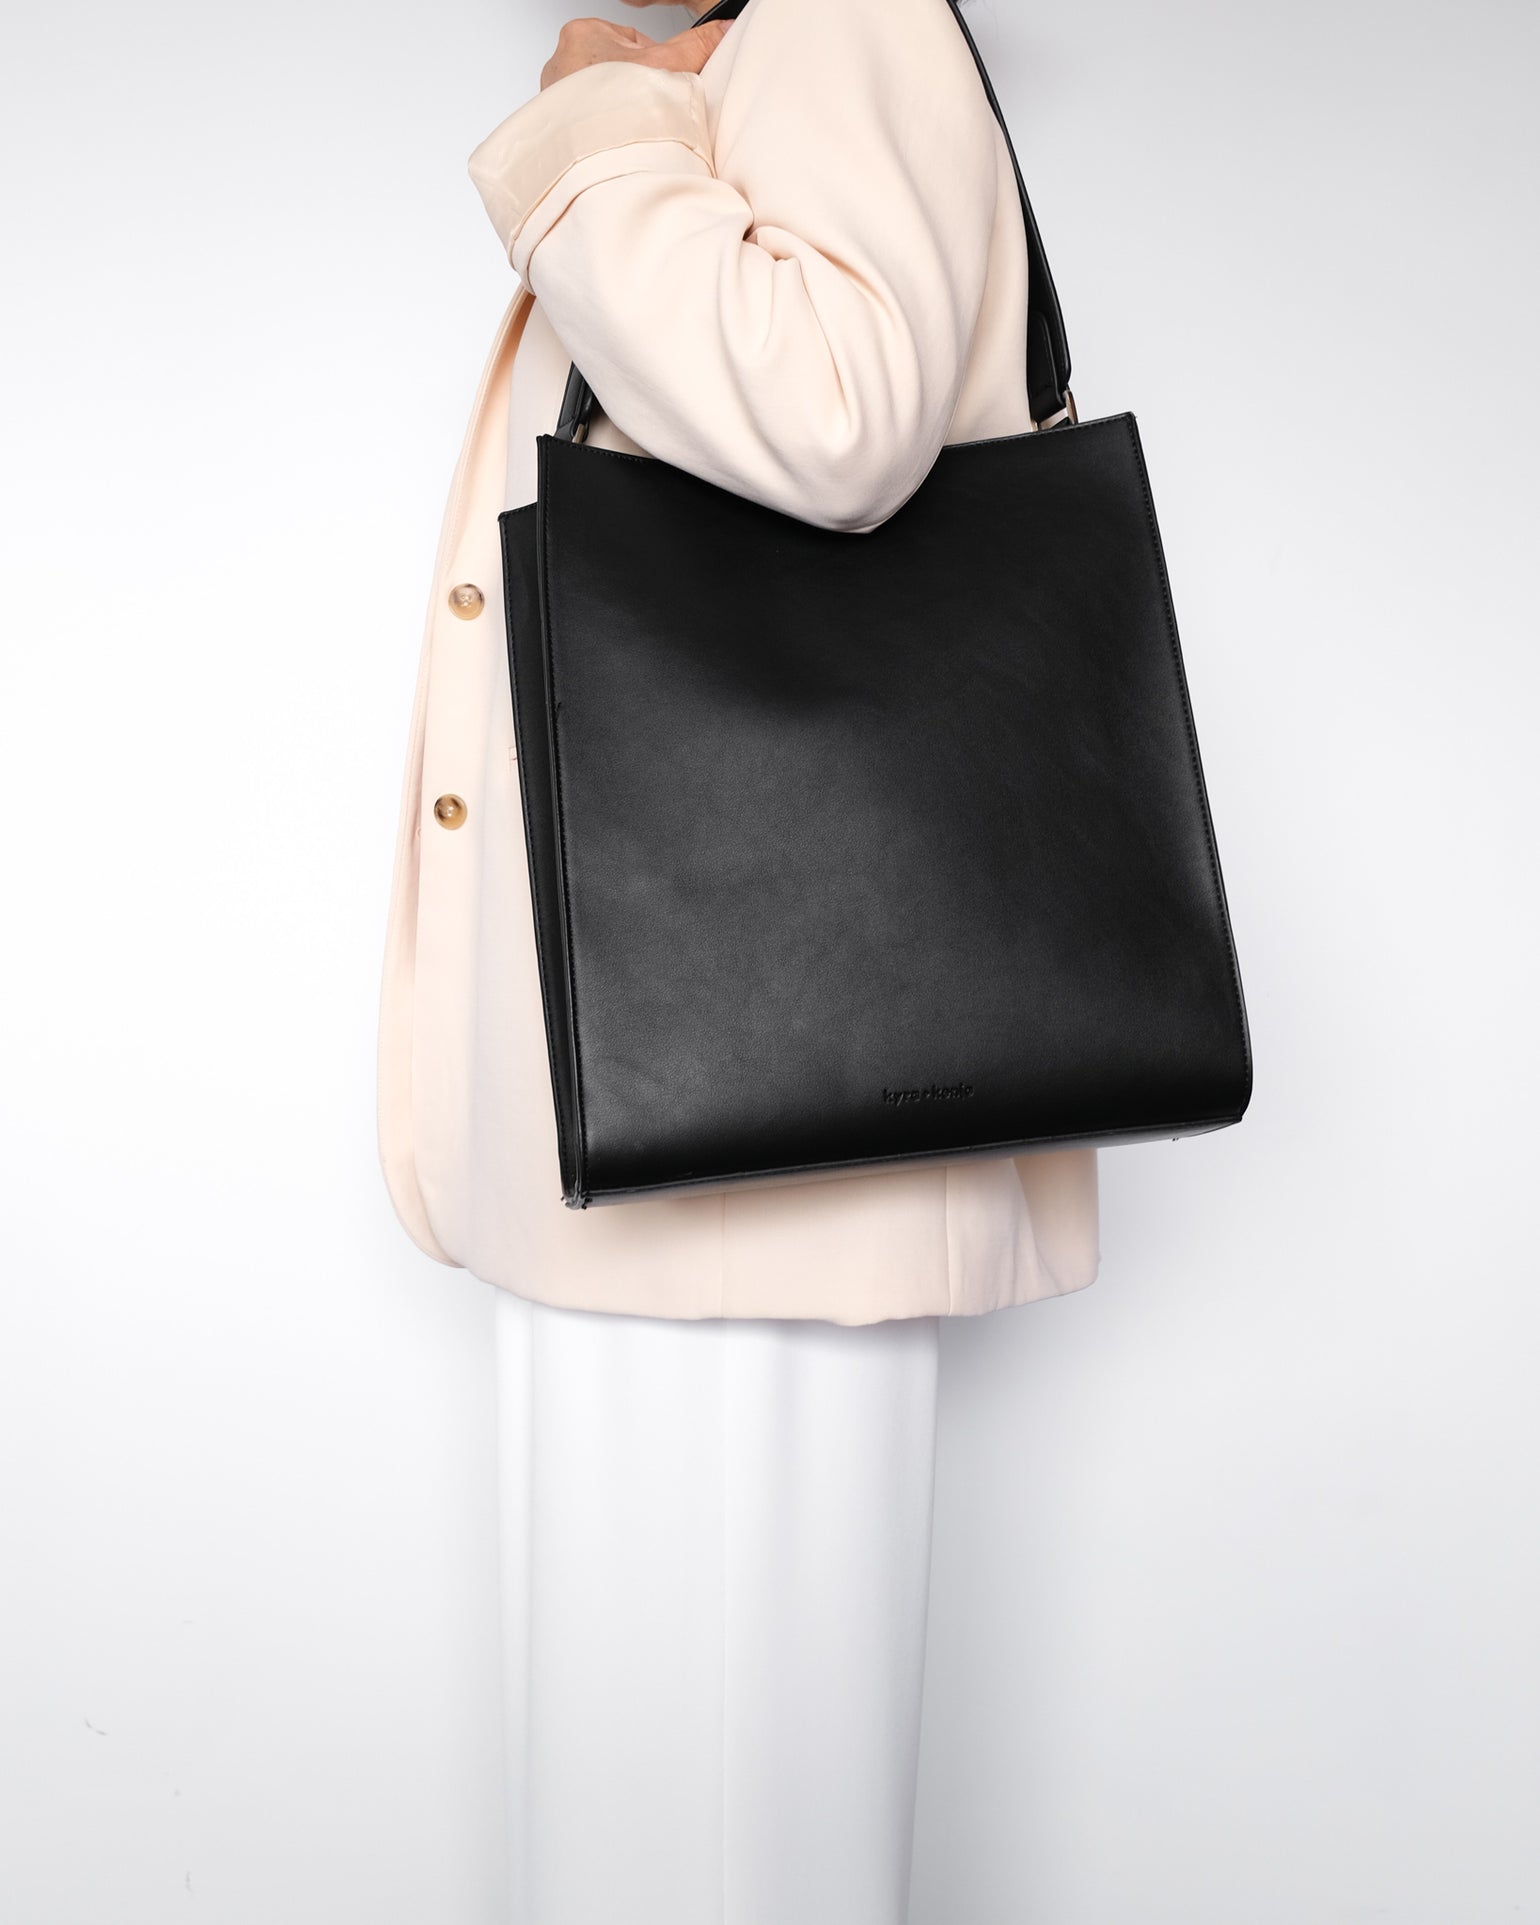 Women's Shoulder Bags | Women's Handbags Australia | Minimalist – Kyra ...